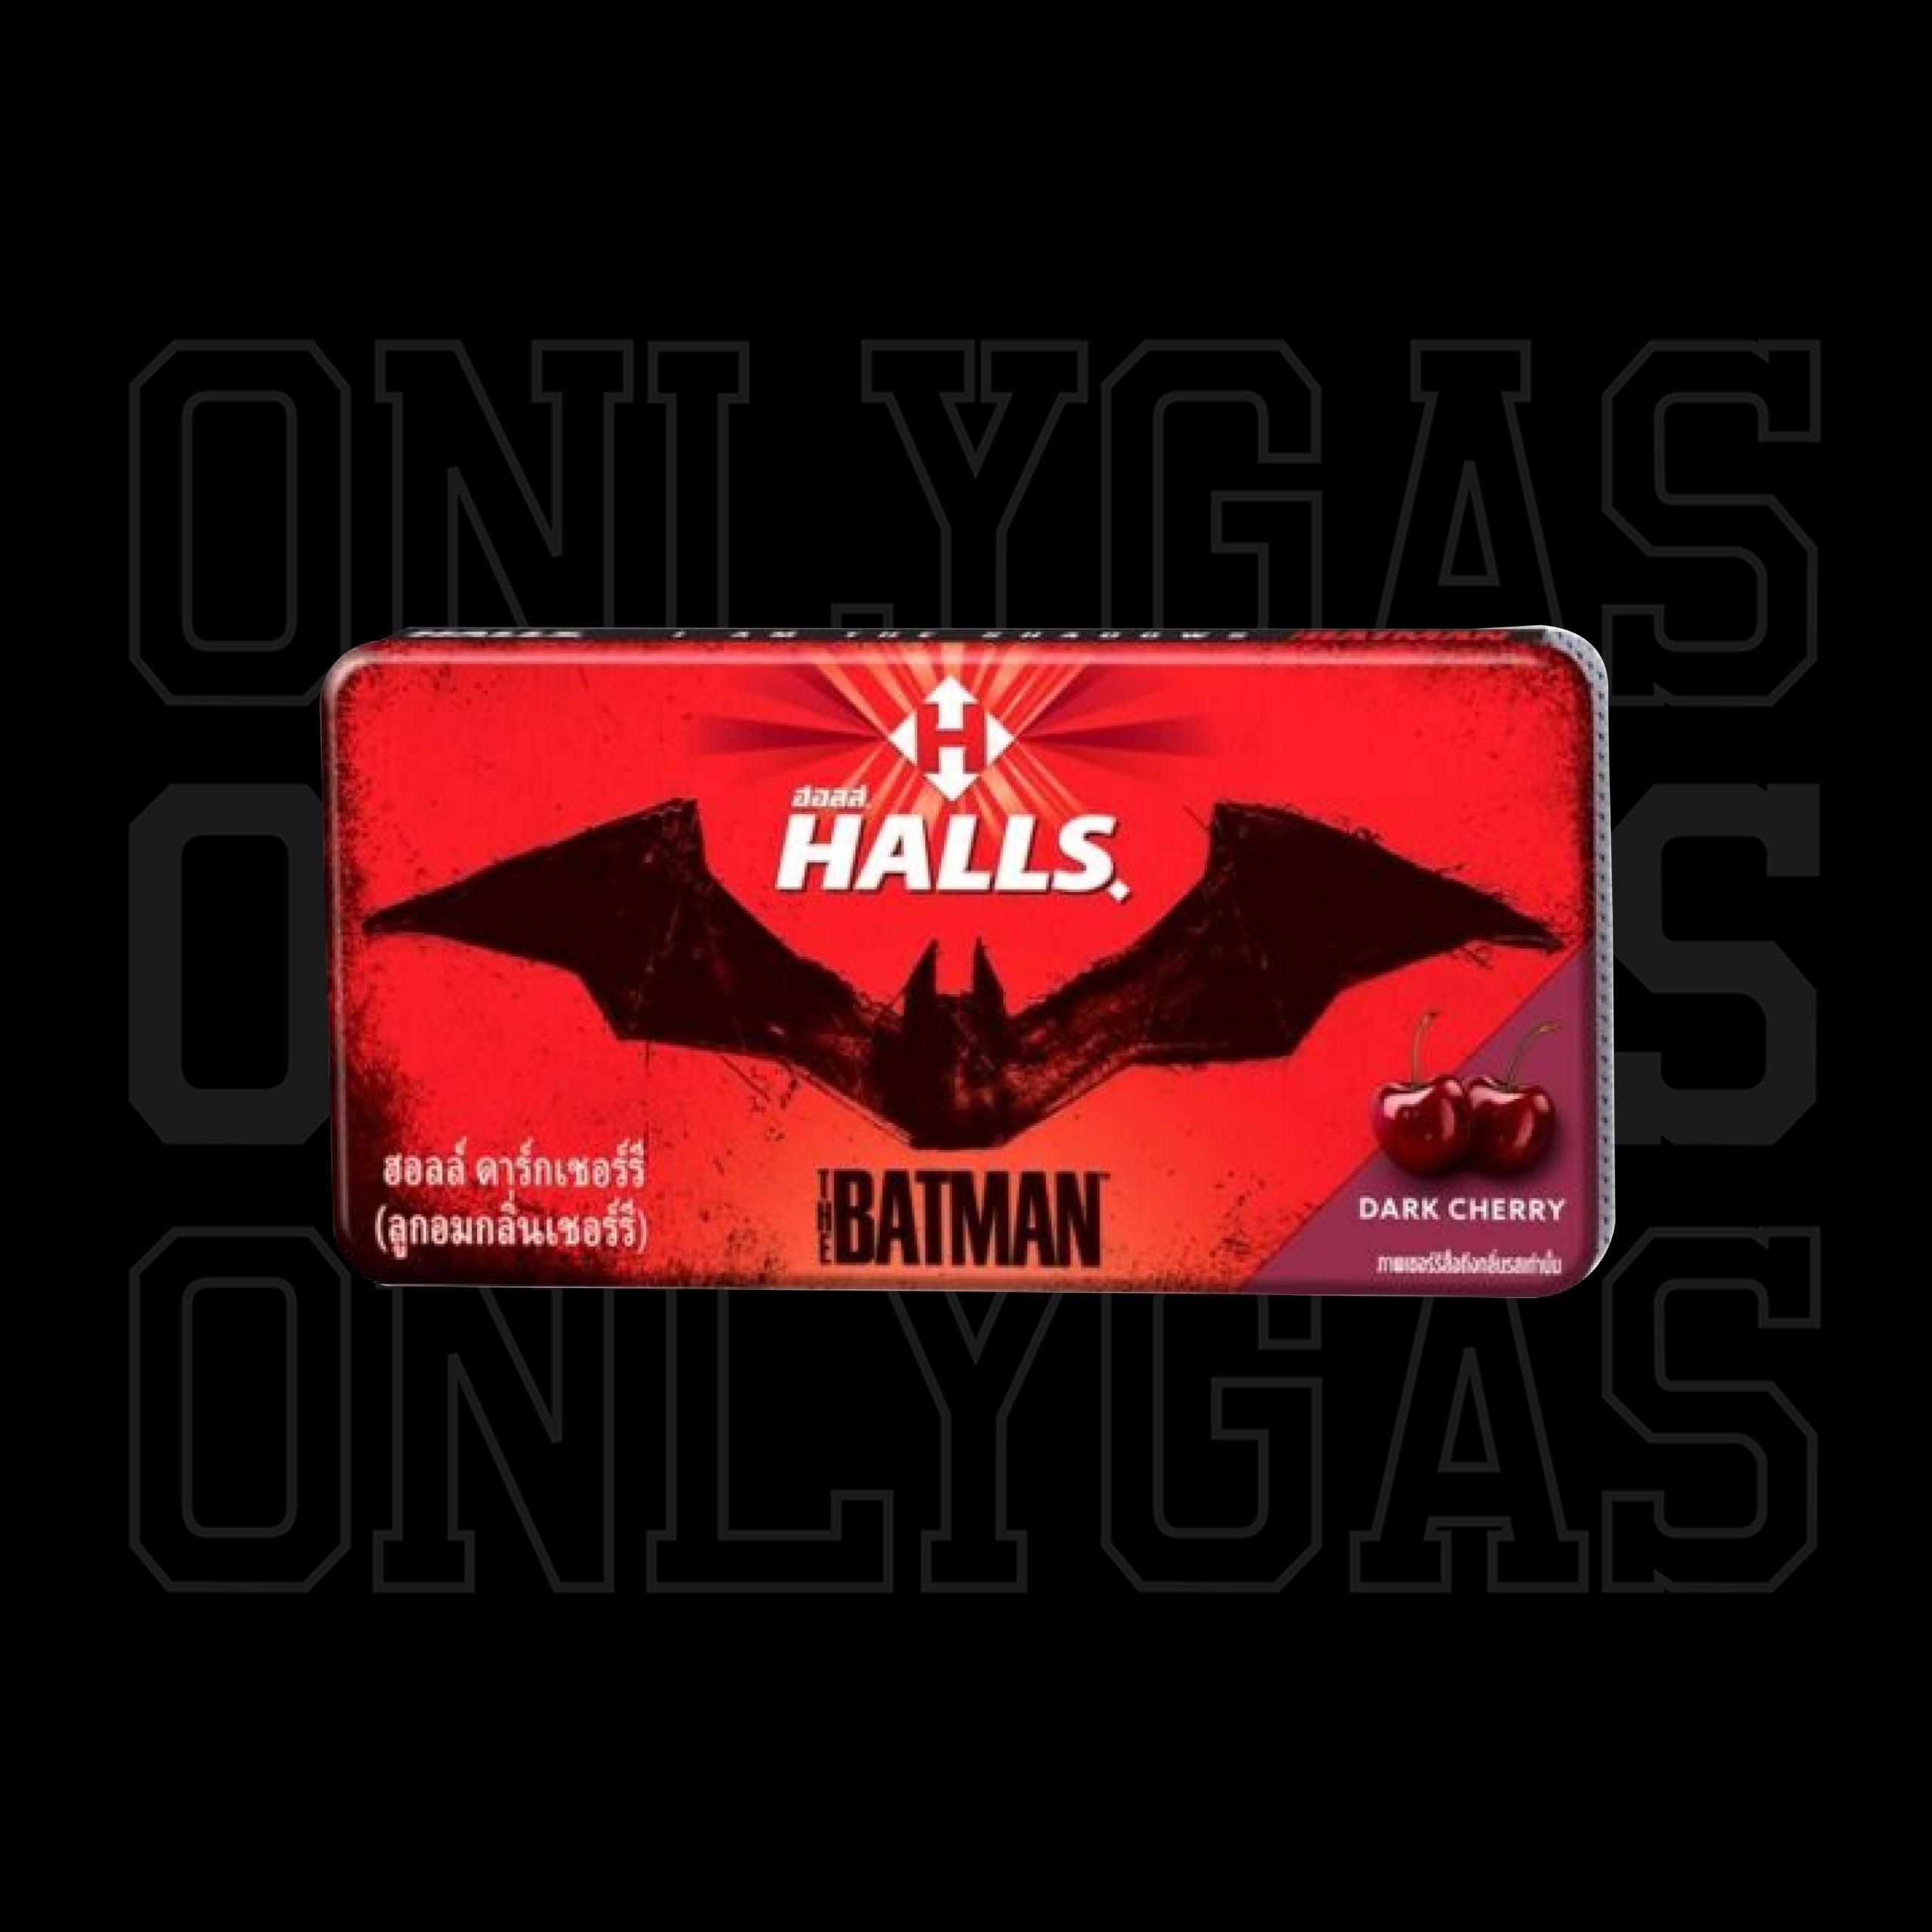 Halls (The Batman Limited Edition) Dark Cherry